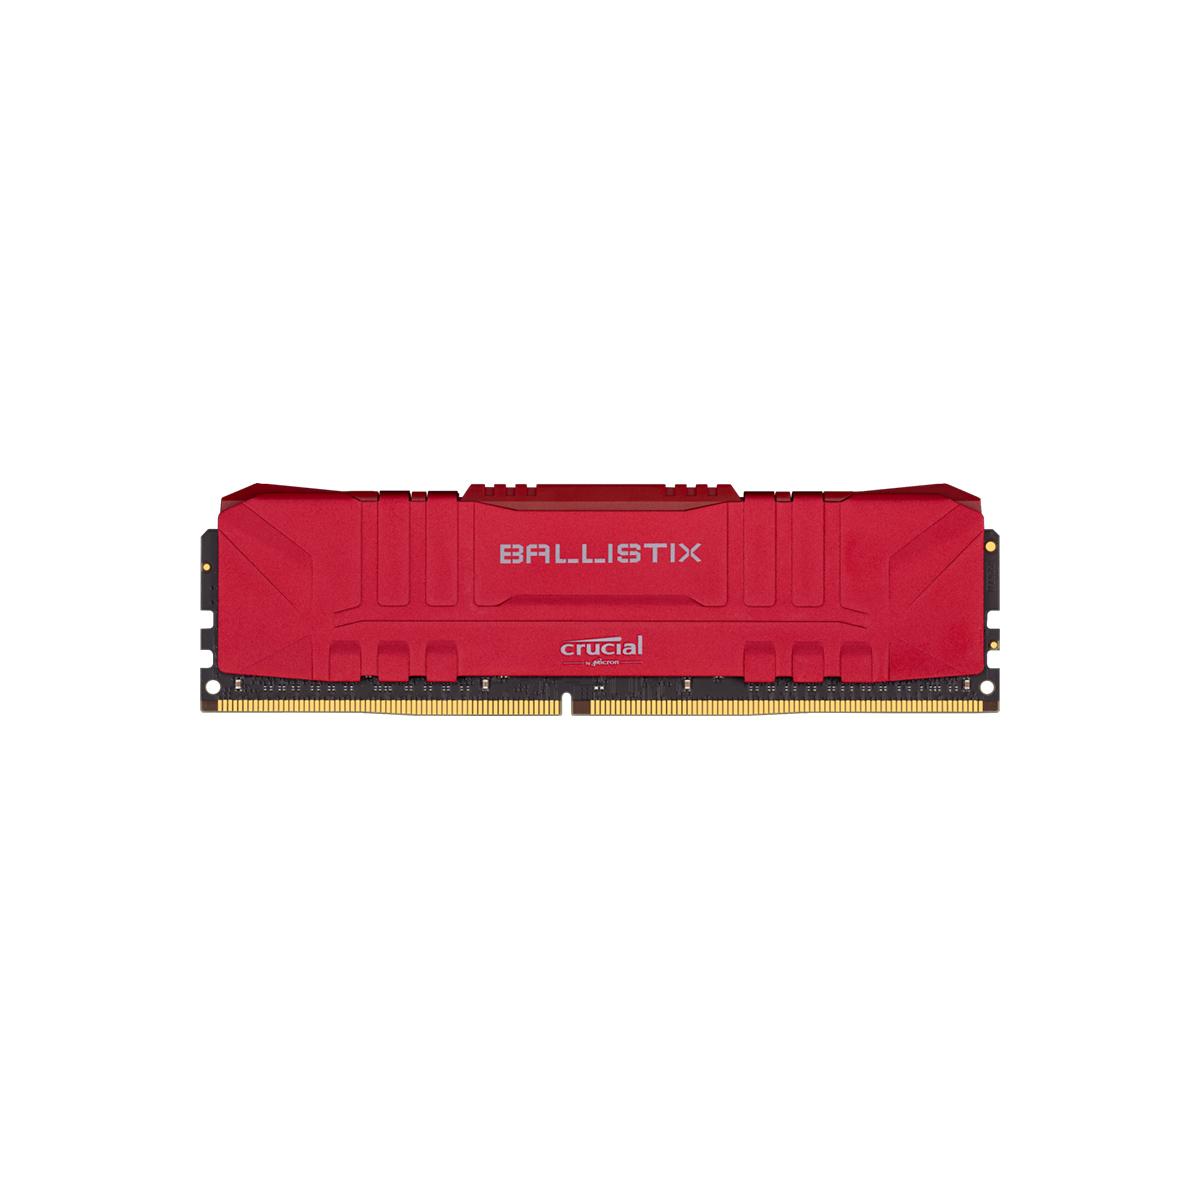 MEMORIA DIMM DDR4 CRUCIAL BALLISTIX (BL16G32C16U4R) 16GB 3200MHZ, RED HEATSINK, CL16 - BL16G32C16U4R